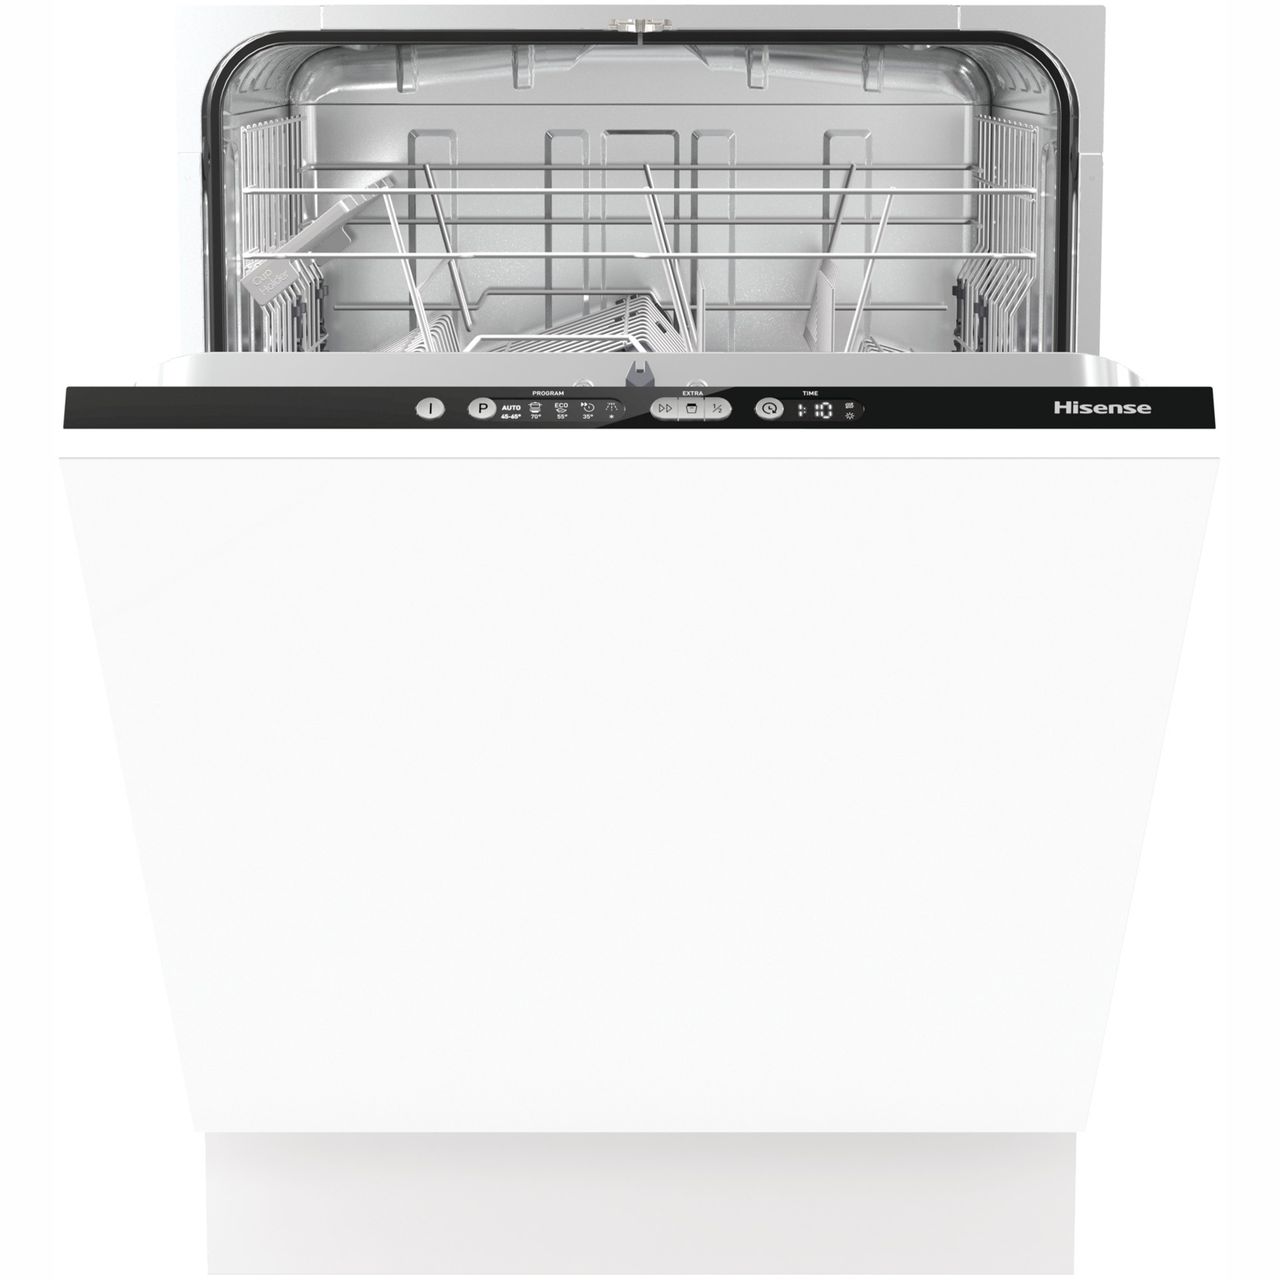 Hisense HV6120UK Fully Integrated Standard Dishwasher Review